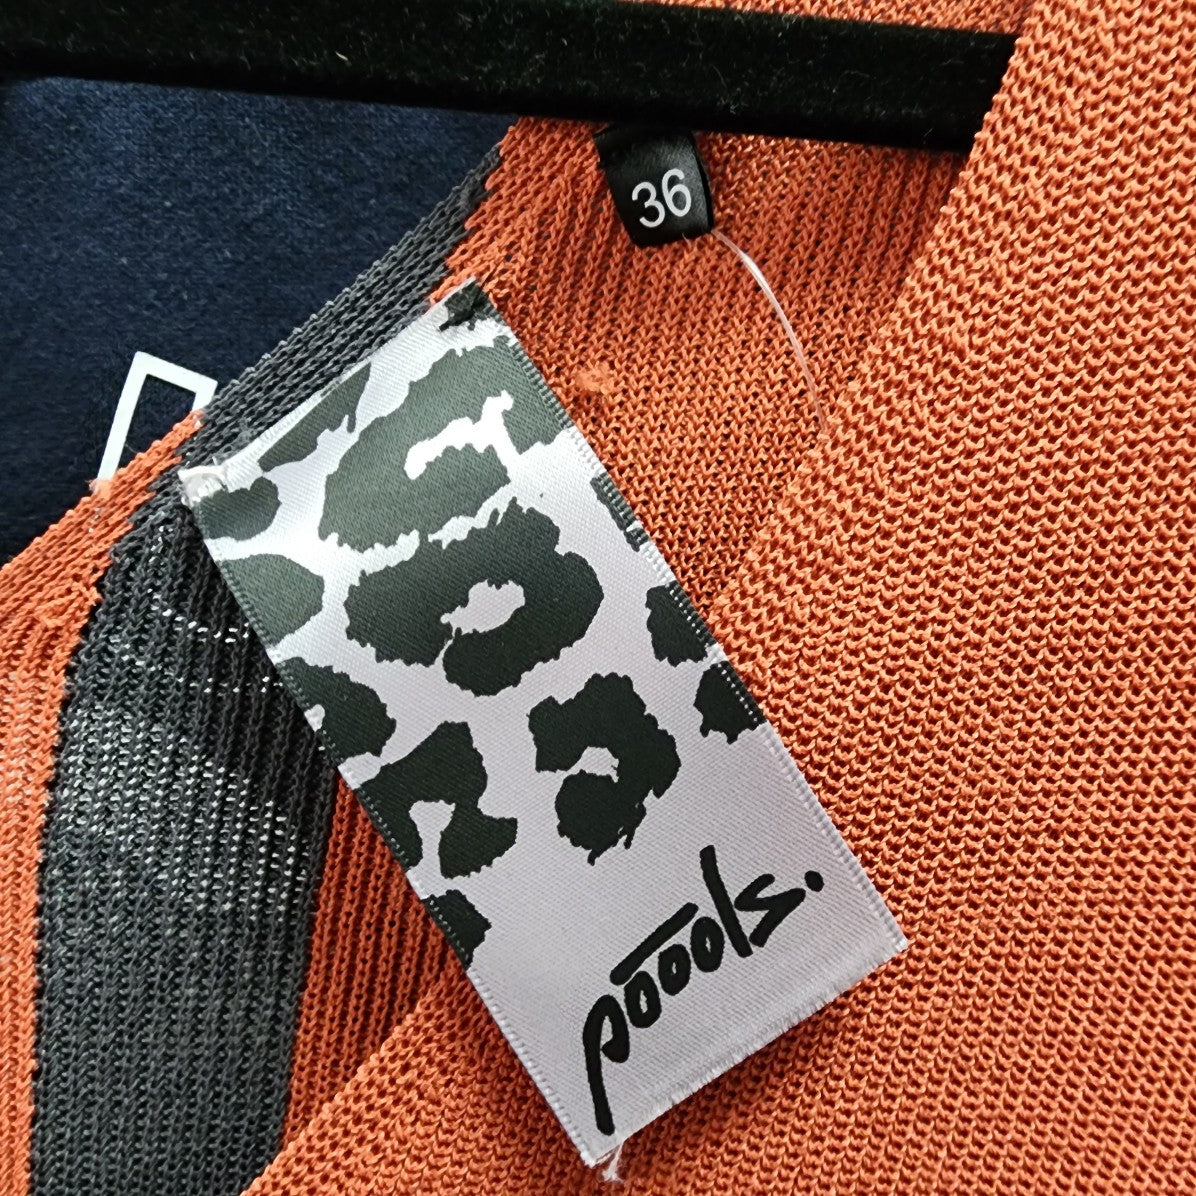 Poools Orange Knit V Neck Sweater Size 6